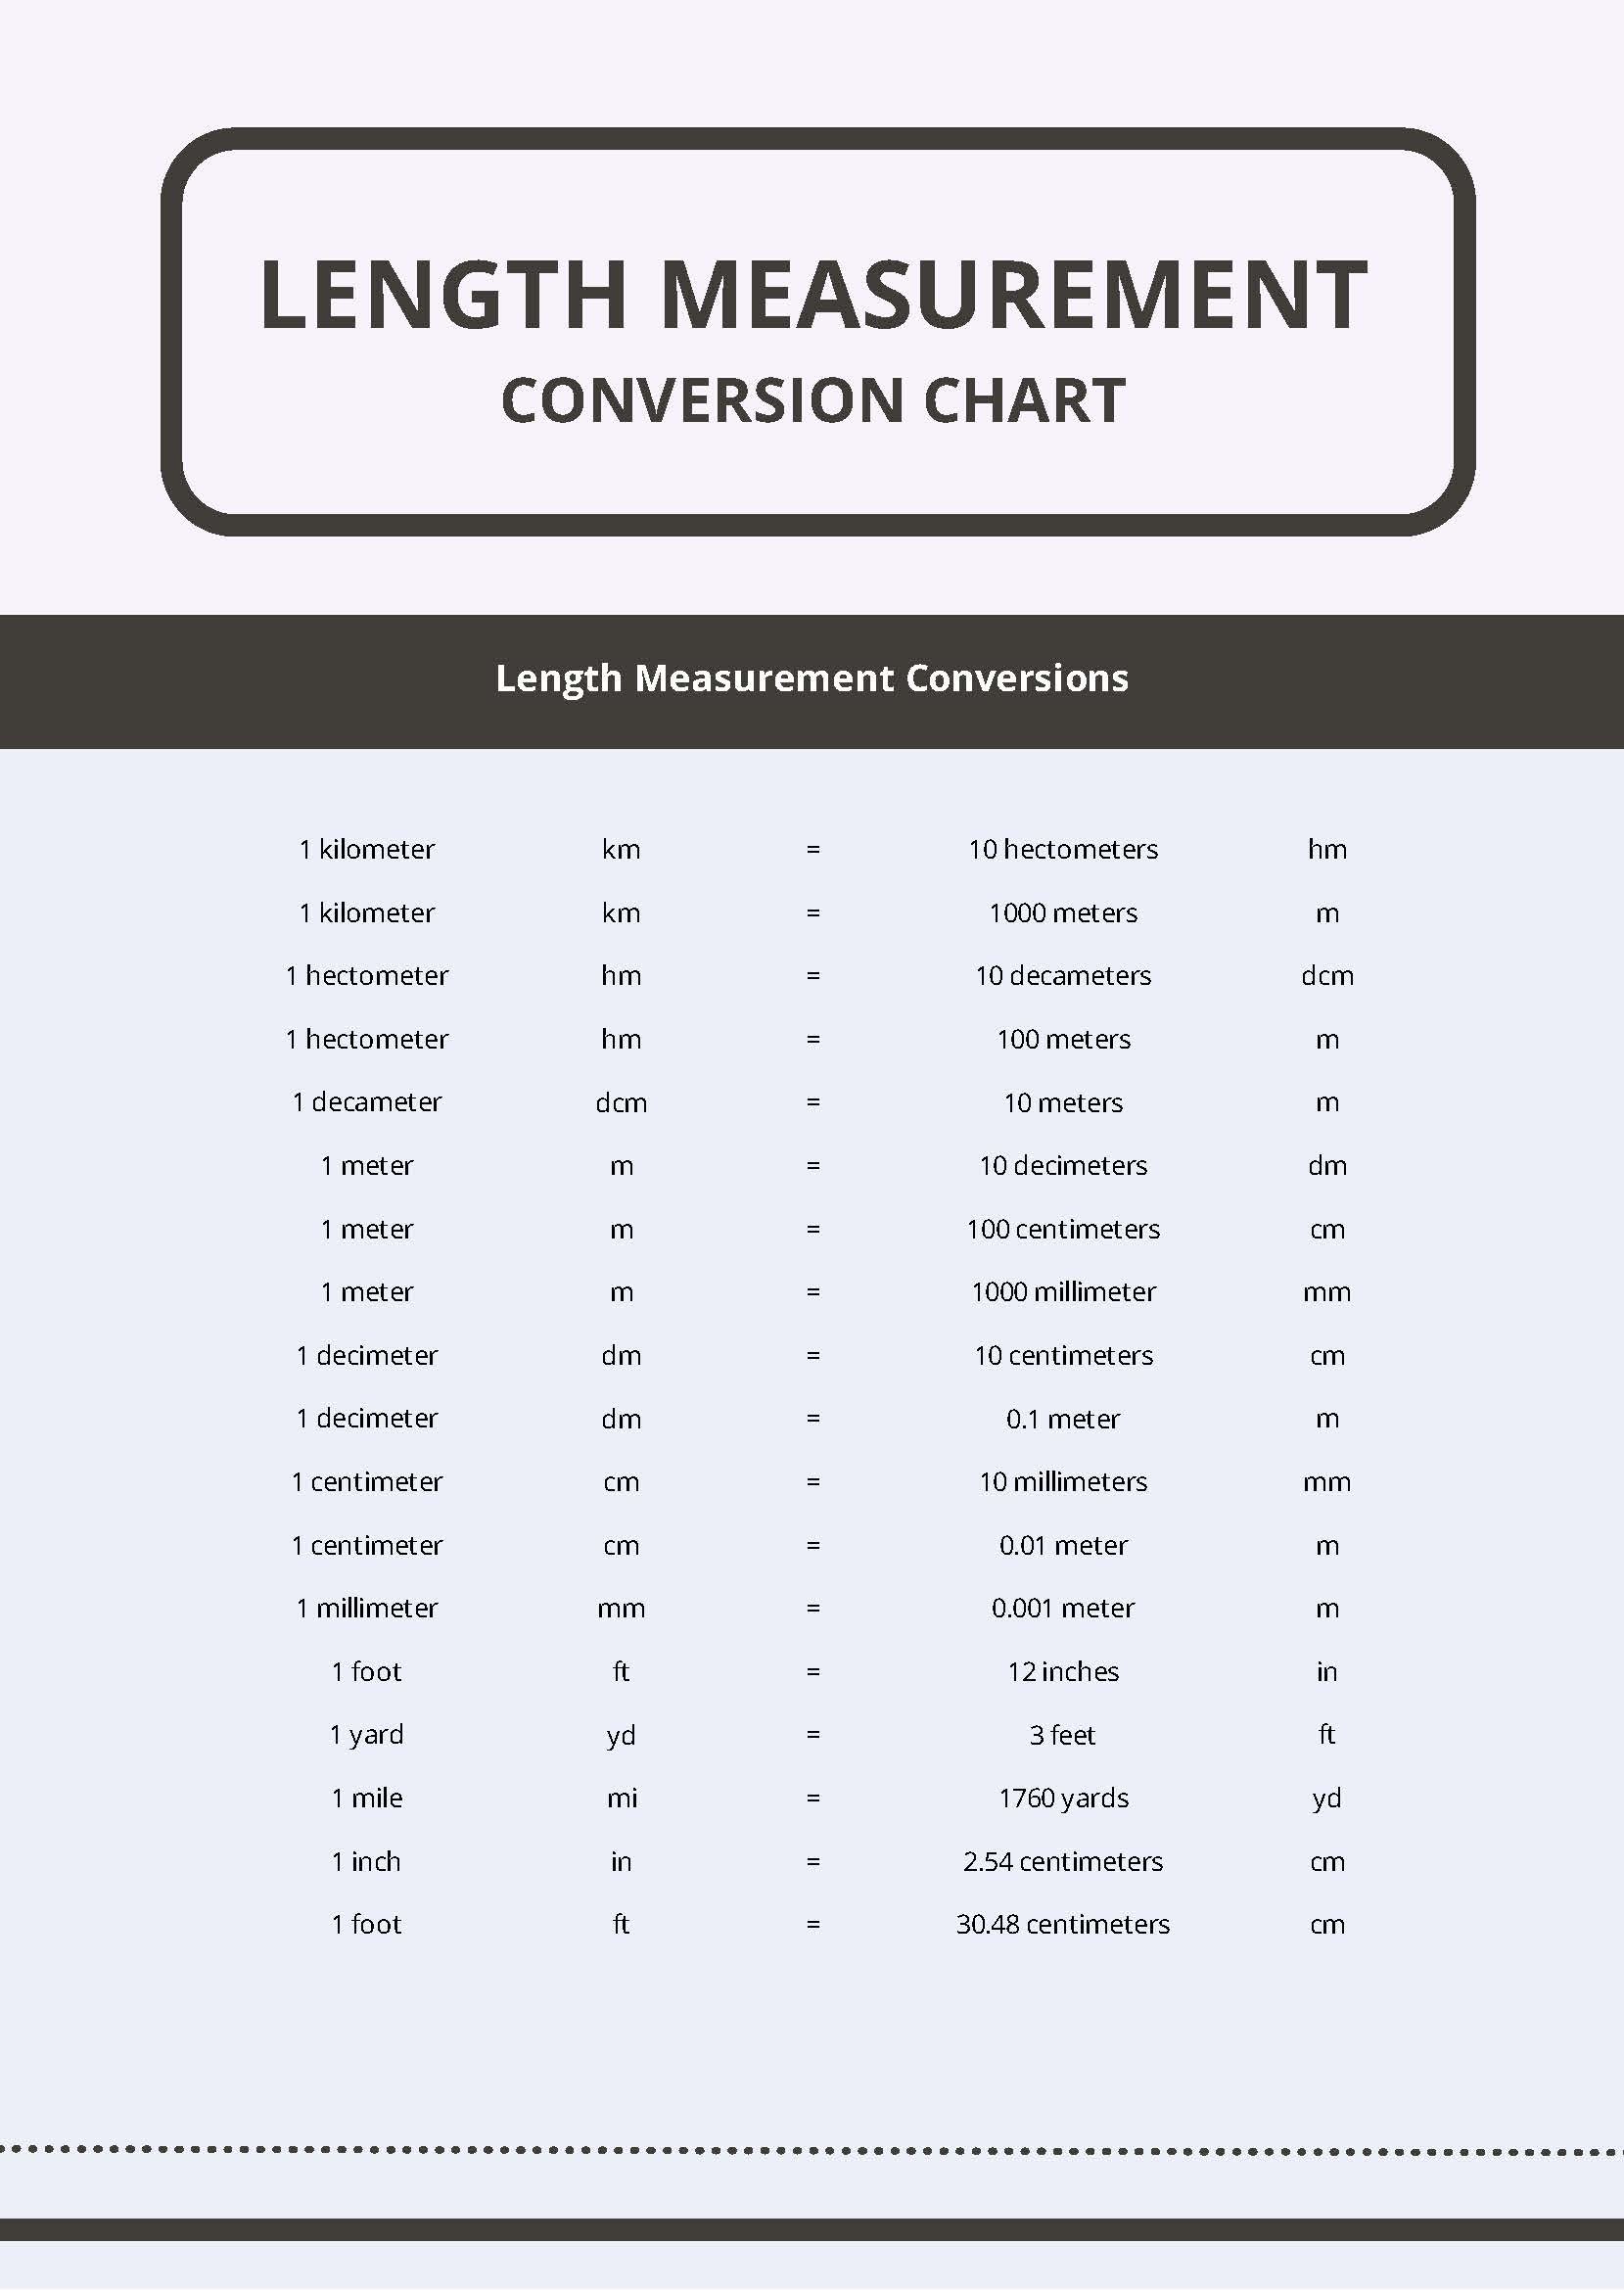 Units of Length Conversion Charts